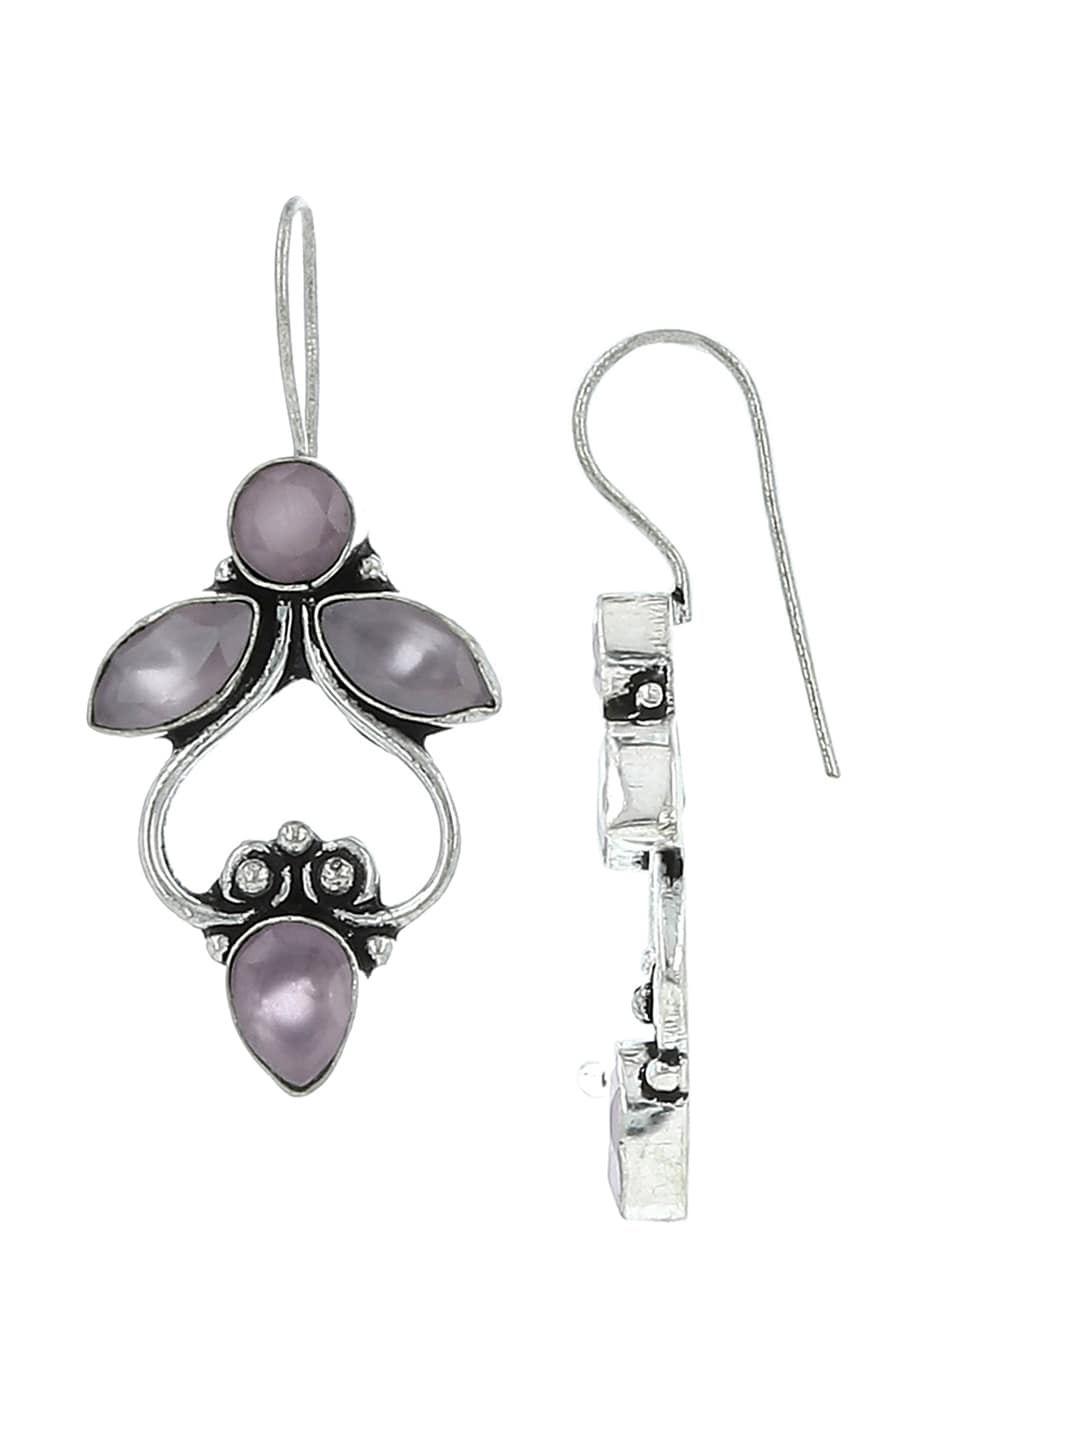 EL REGALO Grey Drop Earrings - for Women and Girls
Style ID: 17119256